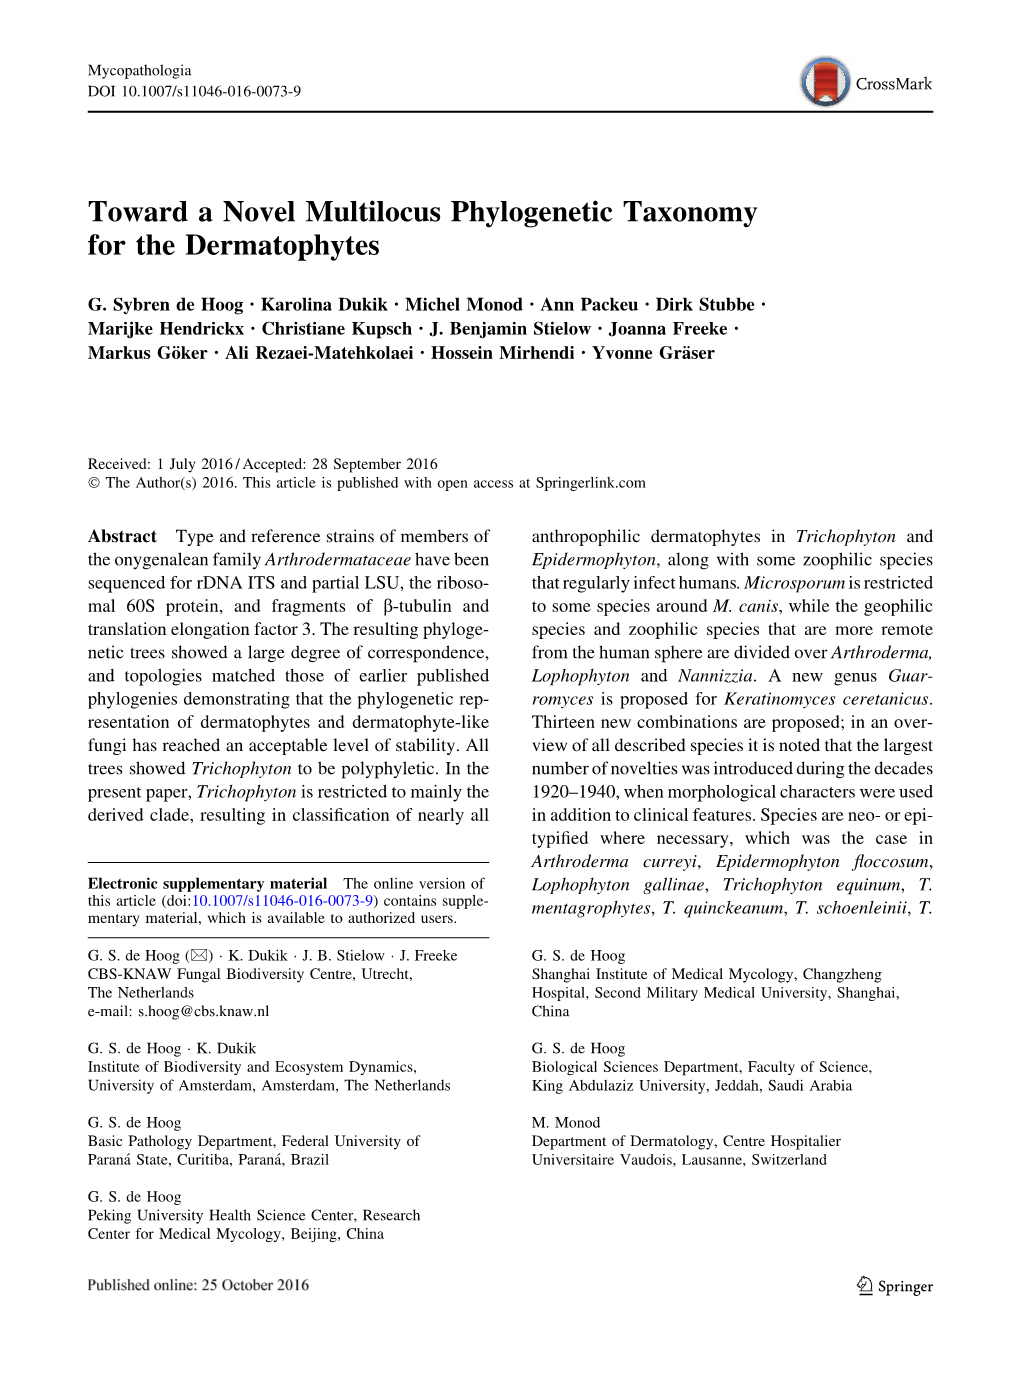 Toward a Novel Multilocus Phylogenetic Taxonomy for the Dermatophytes